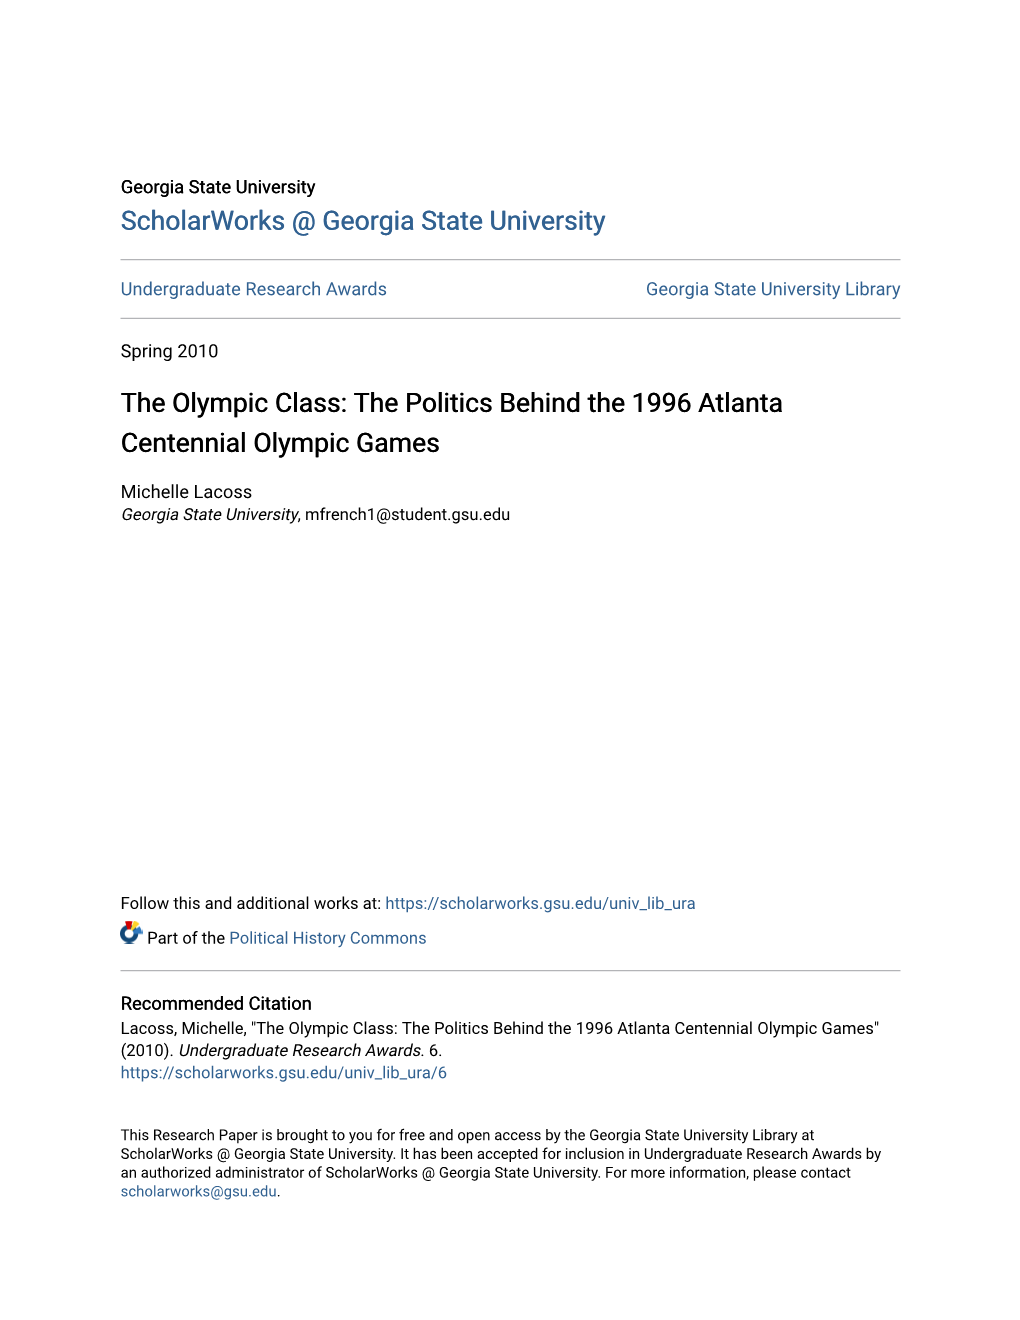 The Politics Behind the 1996 Atlanta Centennial Olympic Games